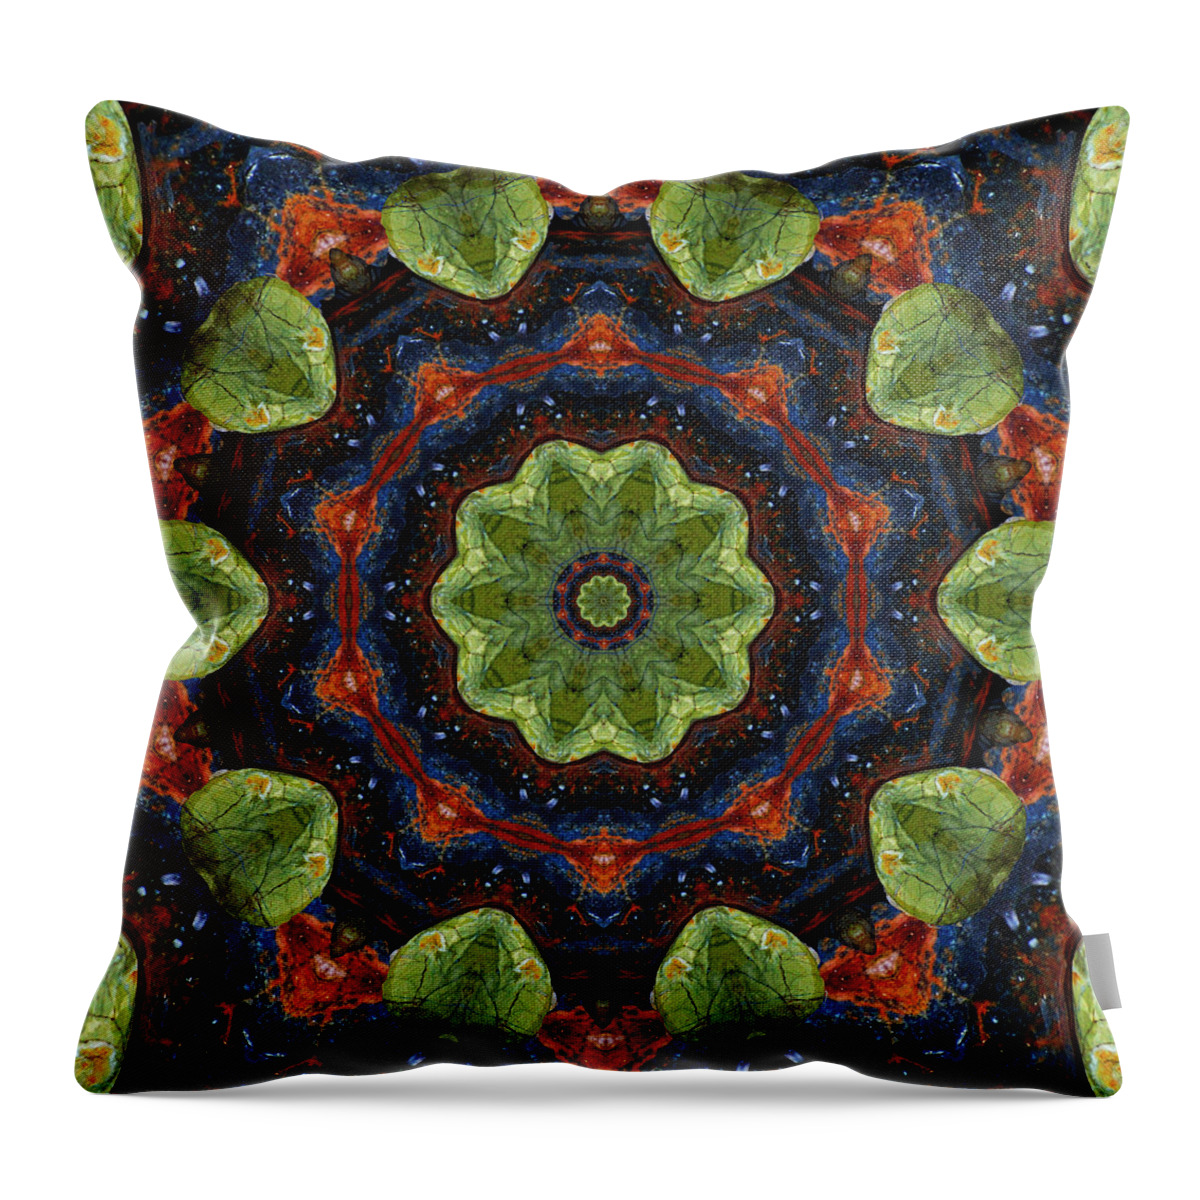 Colorful Throw Pillow featuring the digital art Pebble Mandala by Deborah Smith